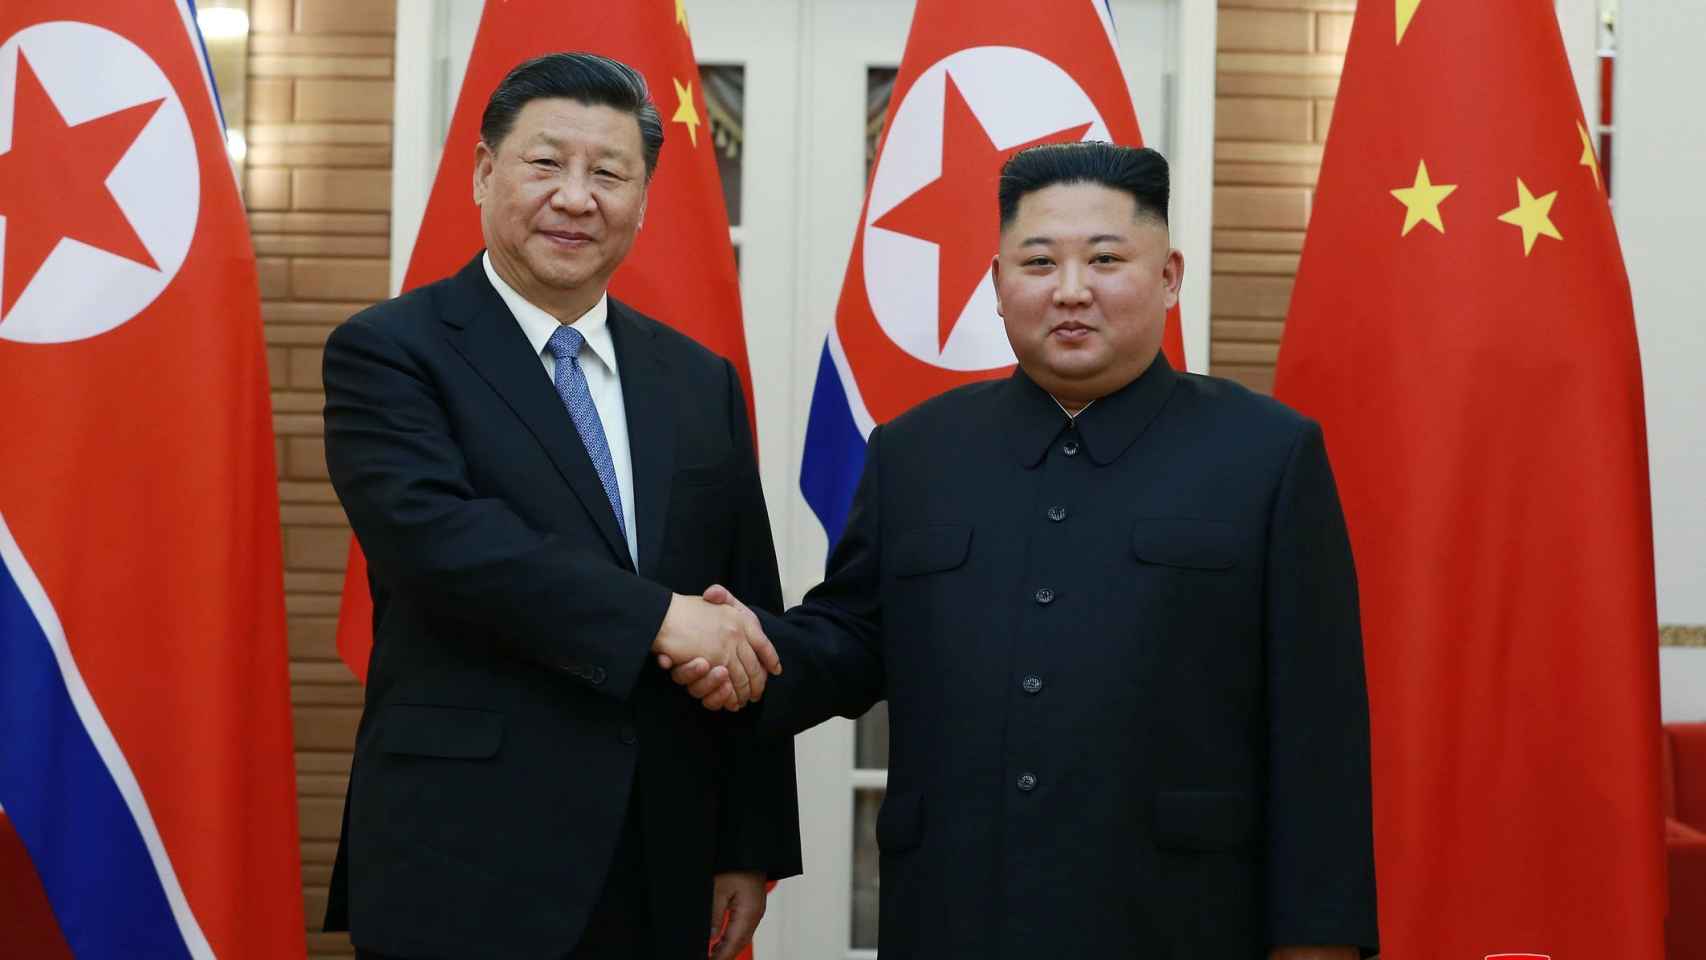 Xi Jinping, presidente chino, y Kim Jong-un, presidente norcoreano, en una reunión en 2019